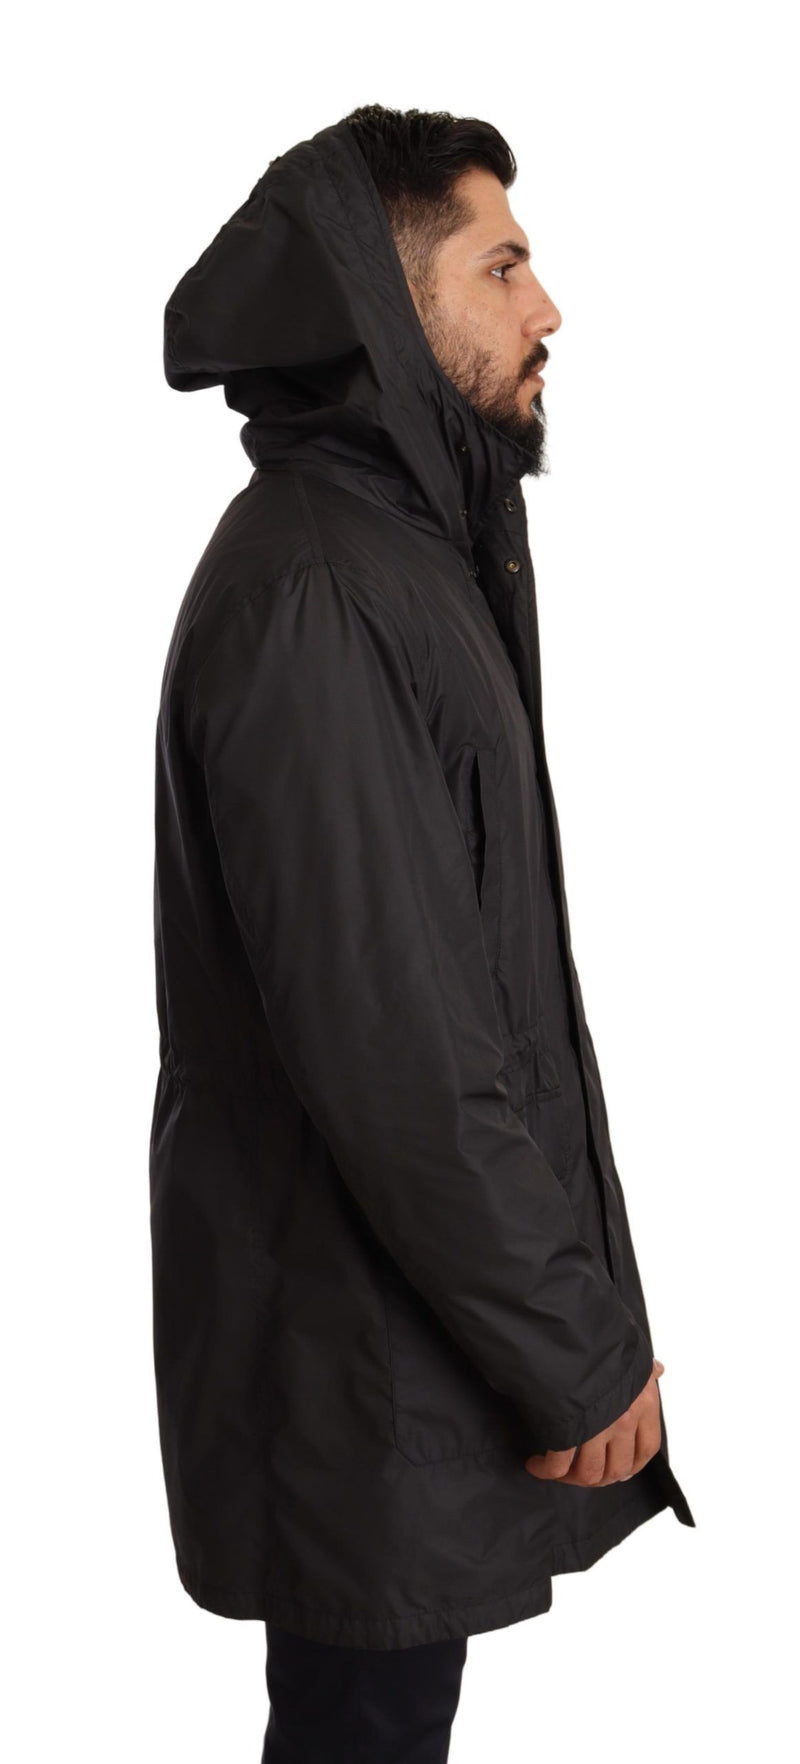 Black Hooded Mens Trench Coat Jacket